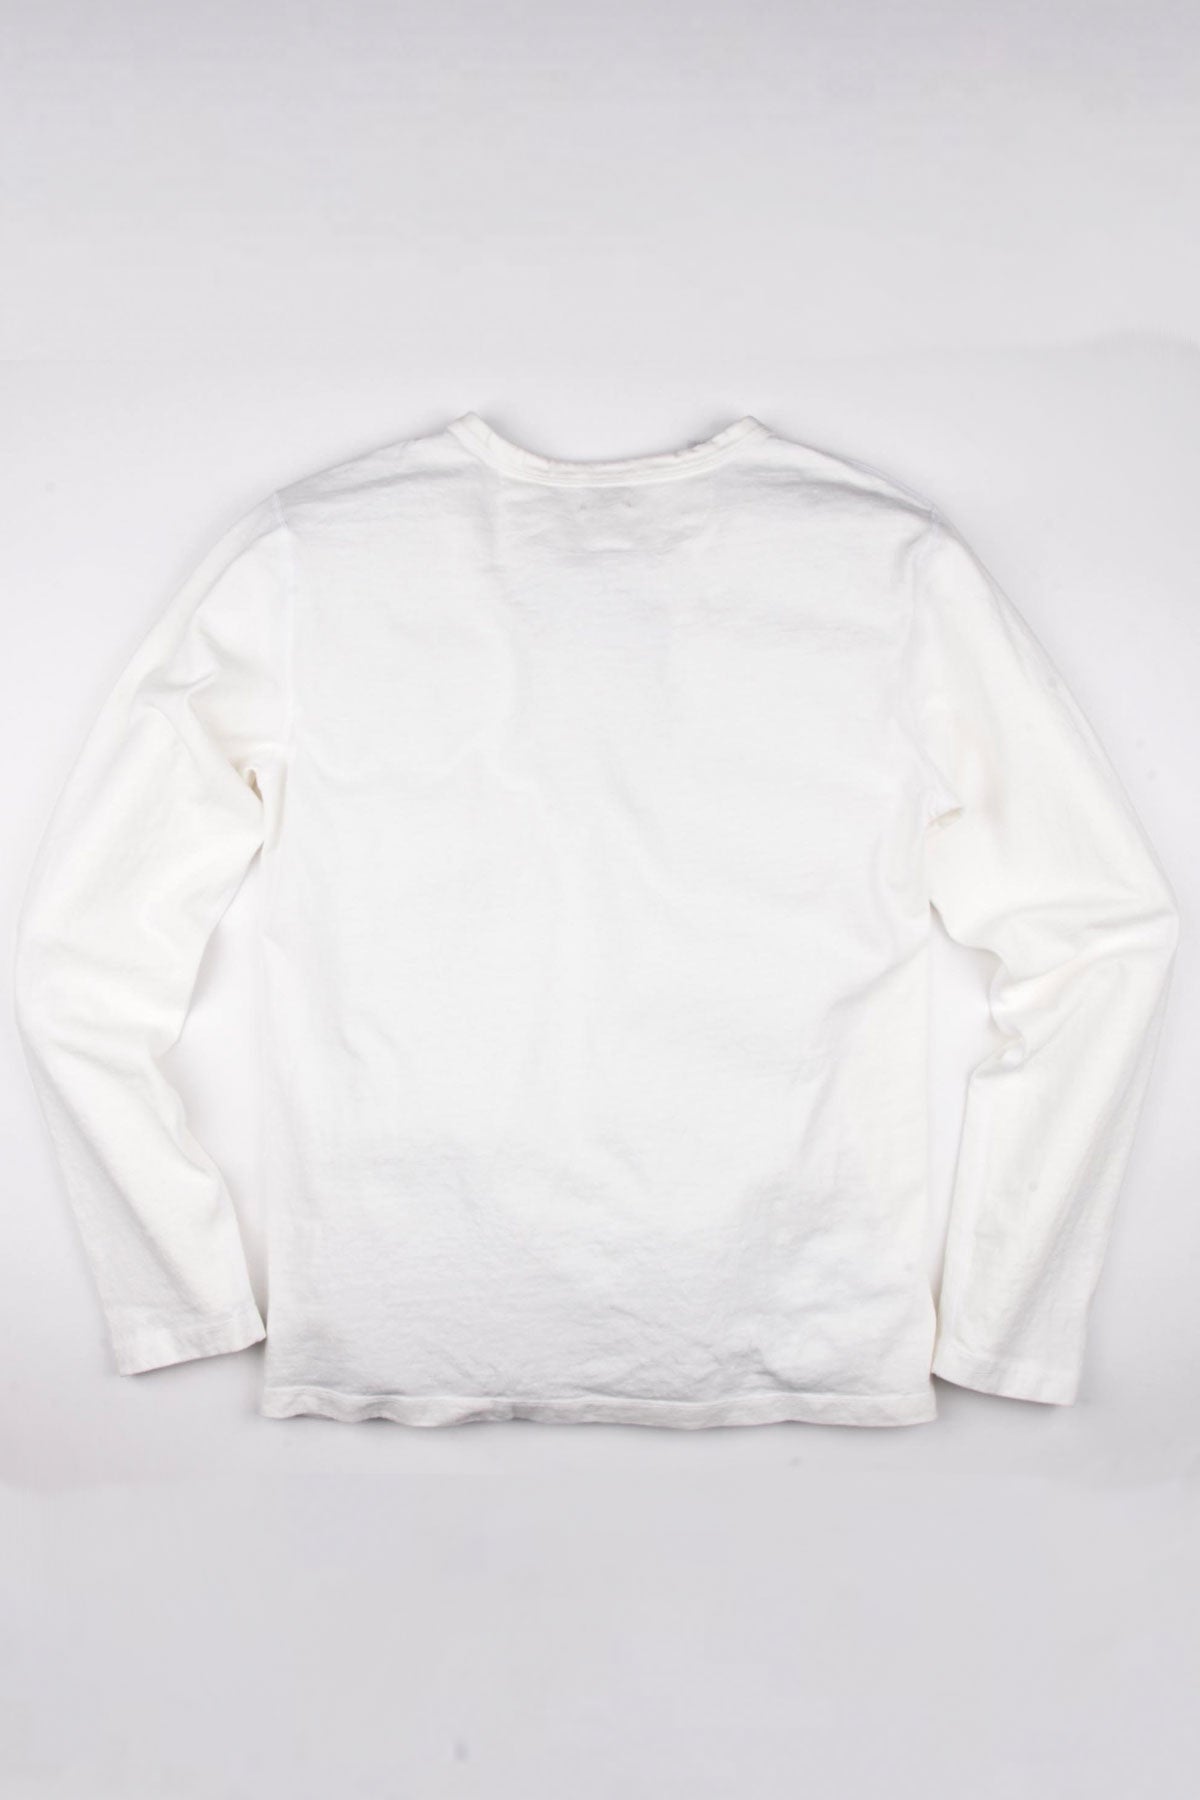 Freenote Cloth - 13 Ounce Henley - L/S White